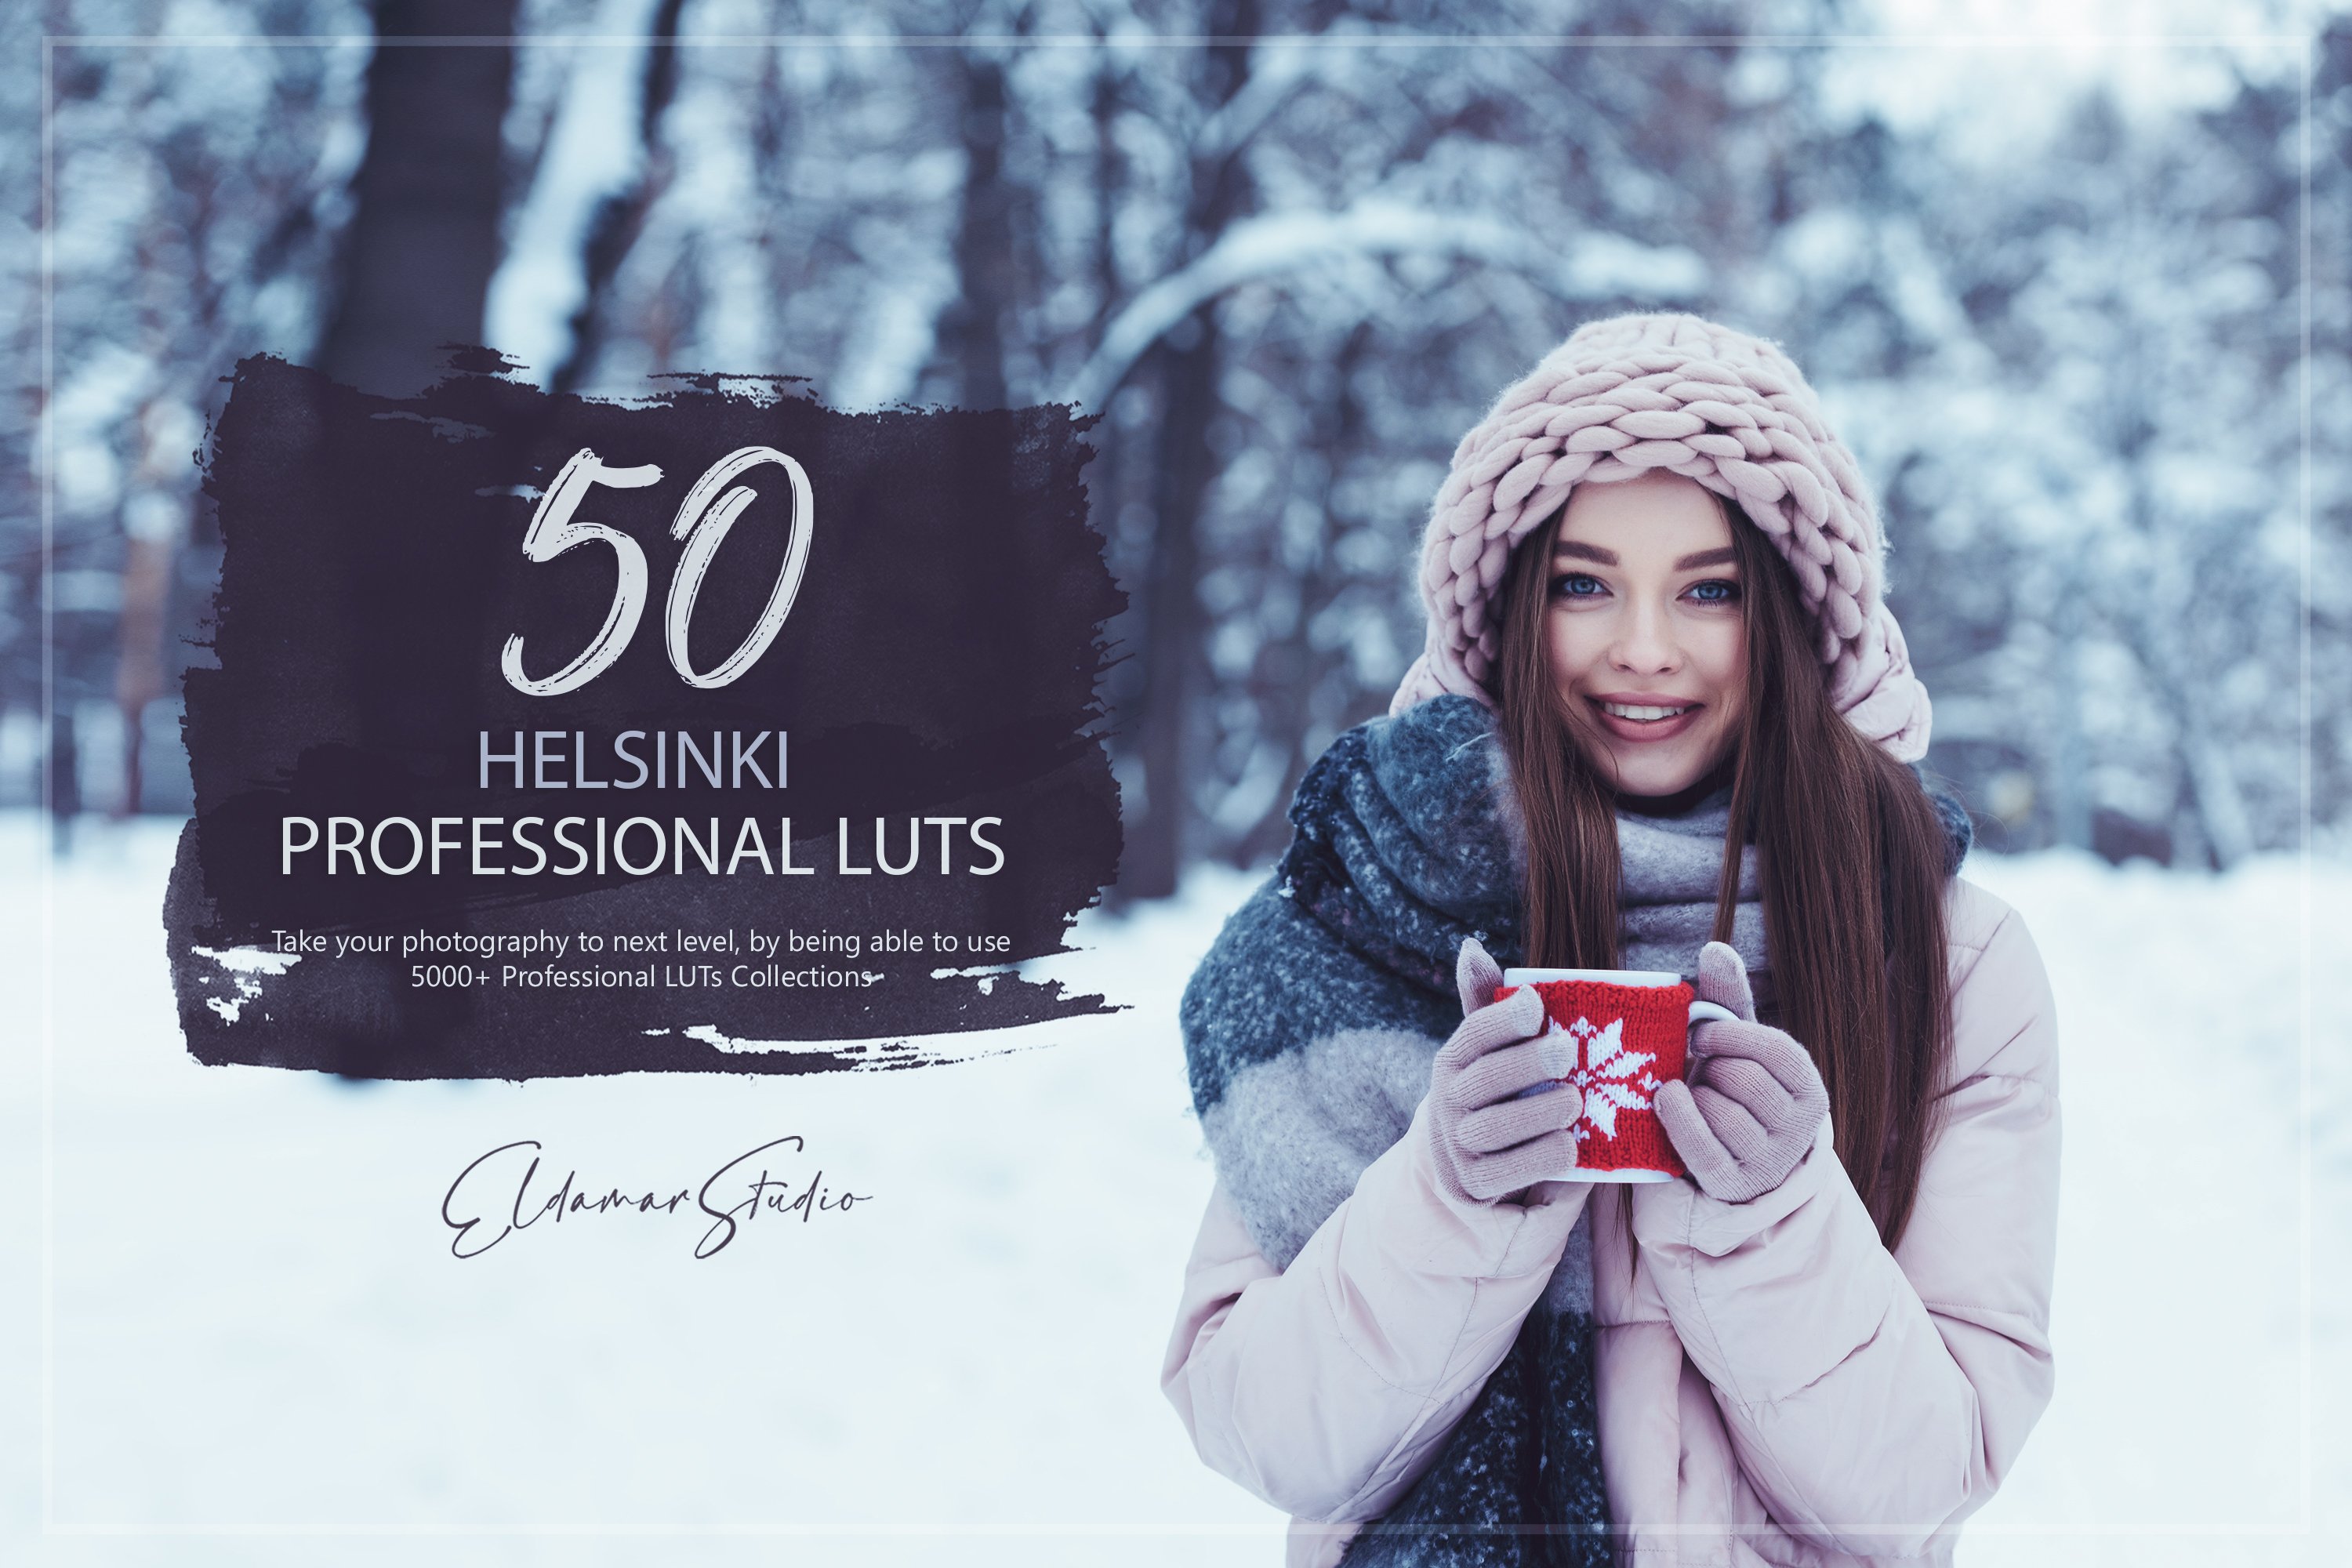 50 Helsinki LUTs Packcover image.